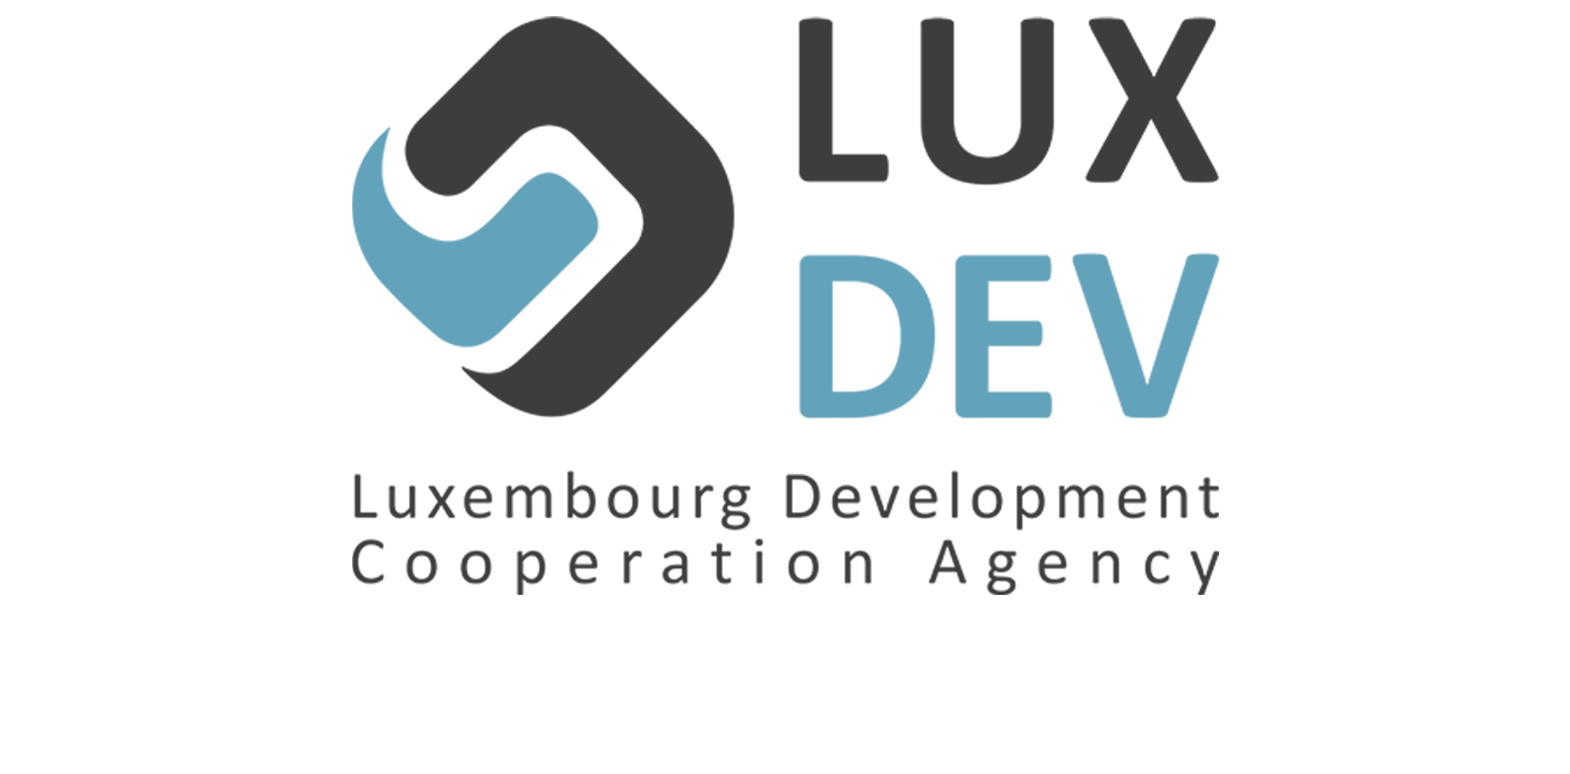 Lux Dev